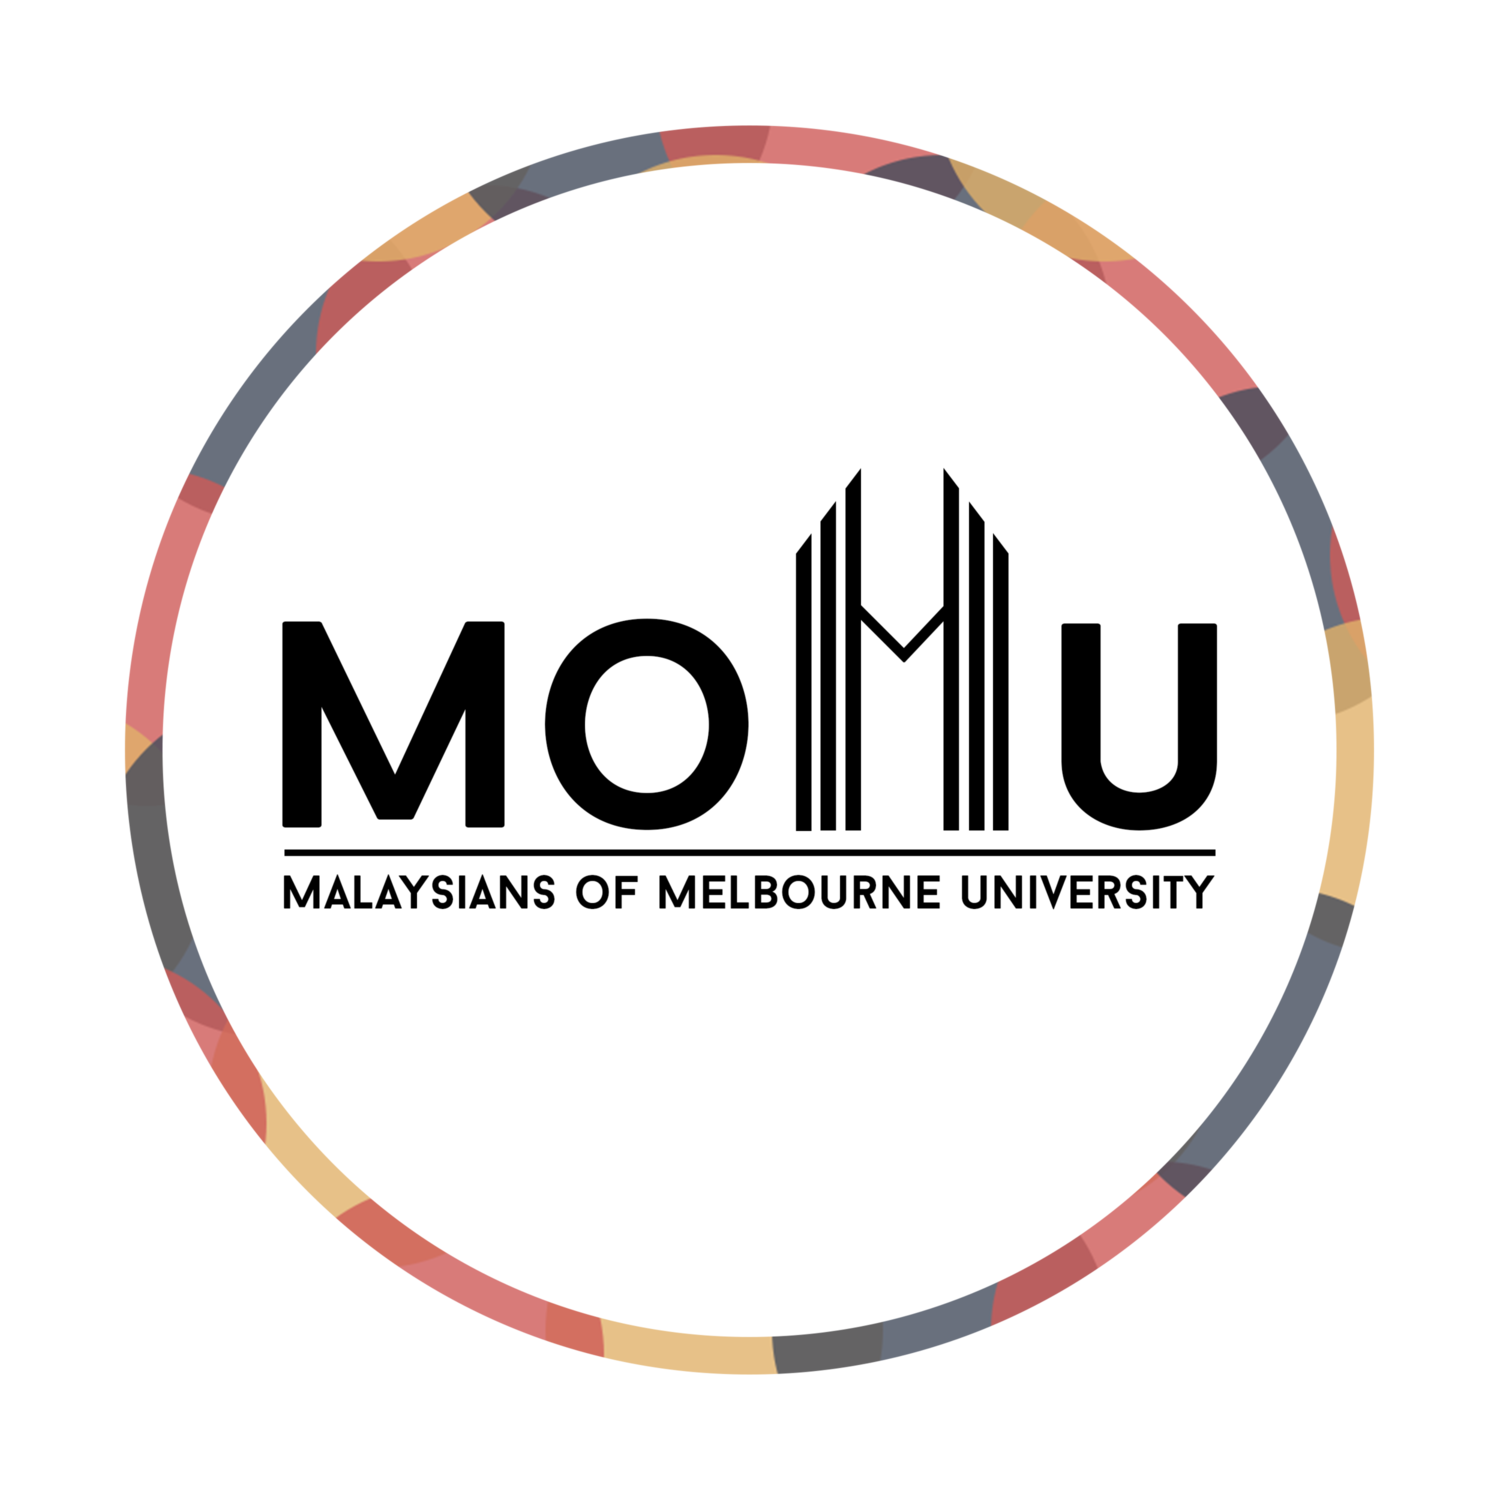 Malaysians of Melbourne University